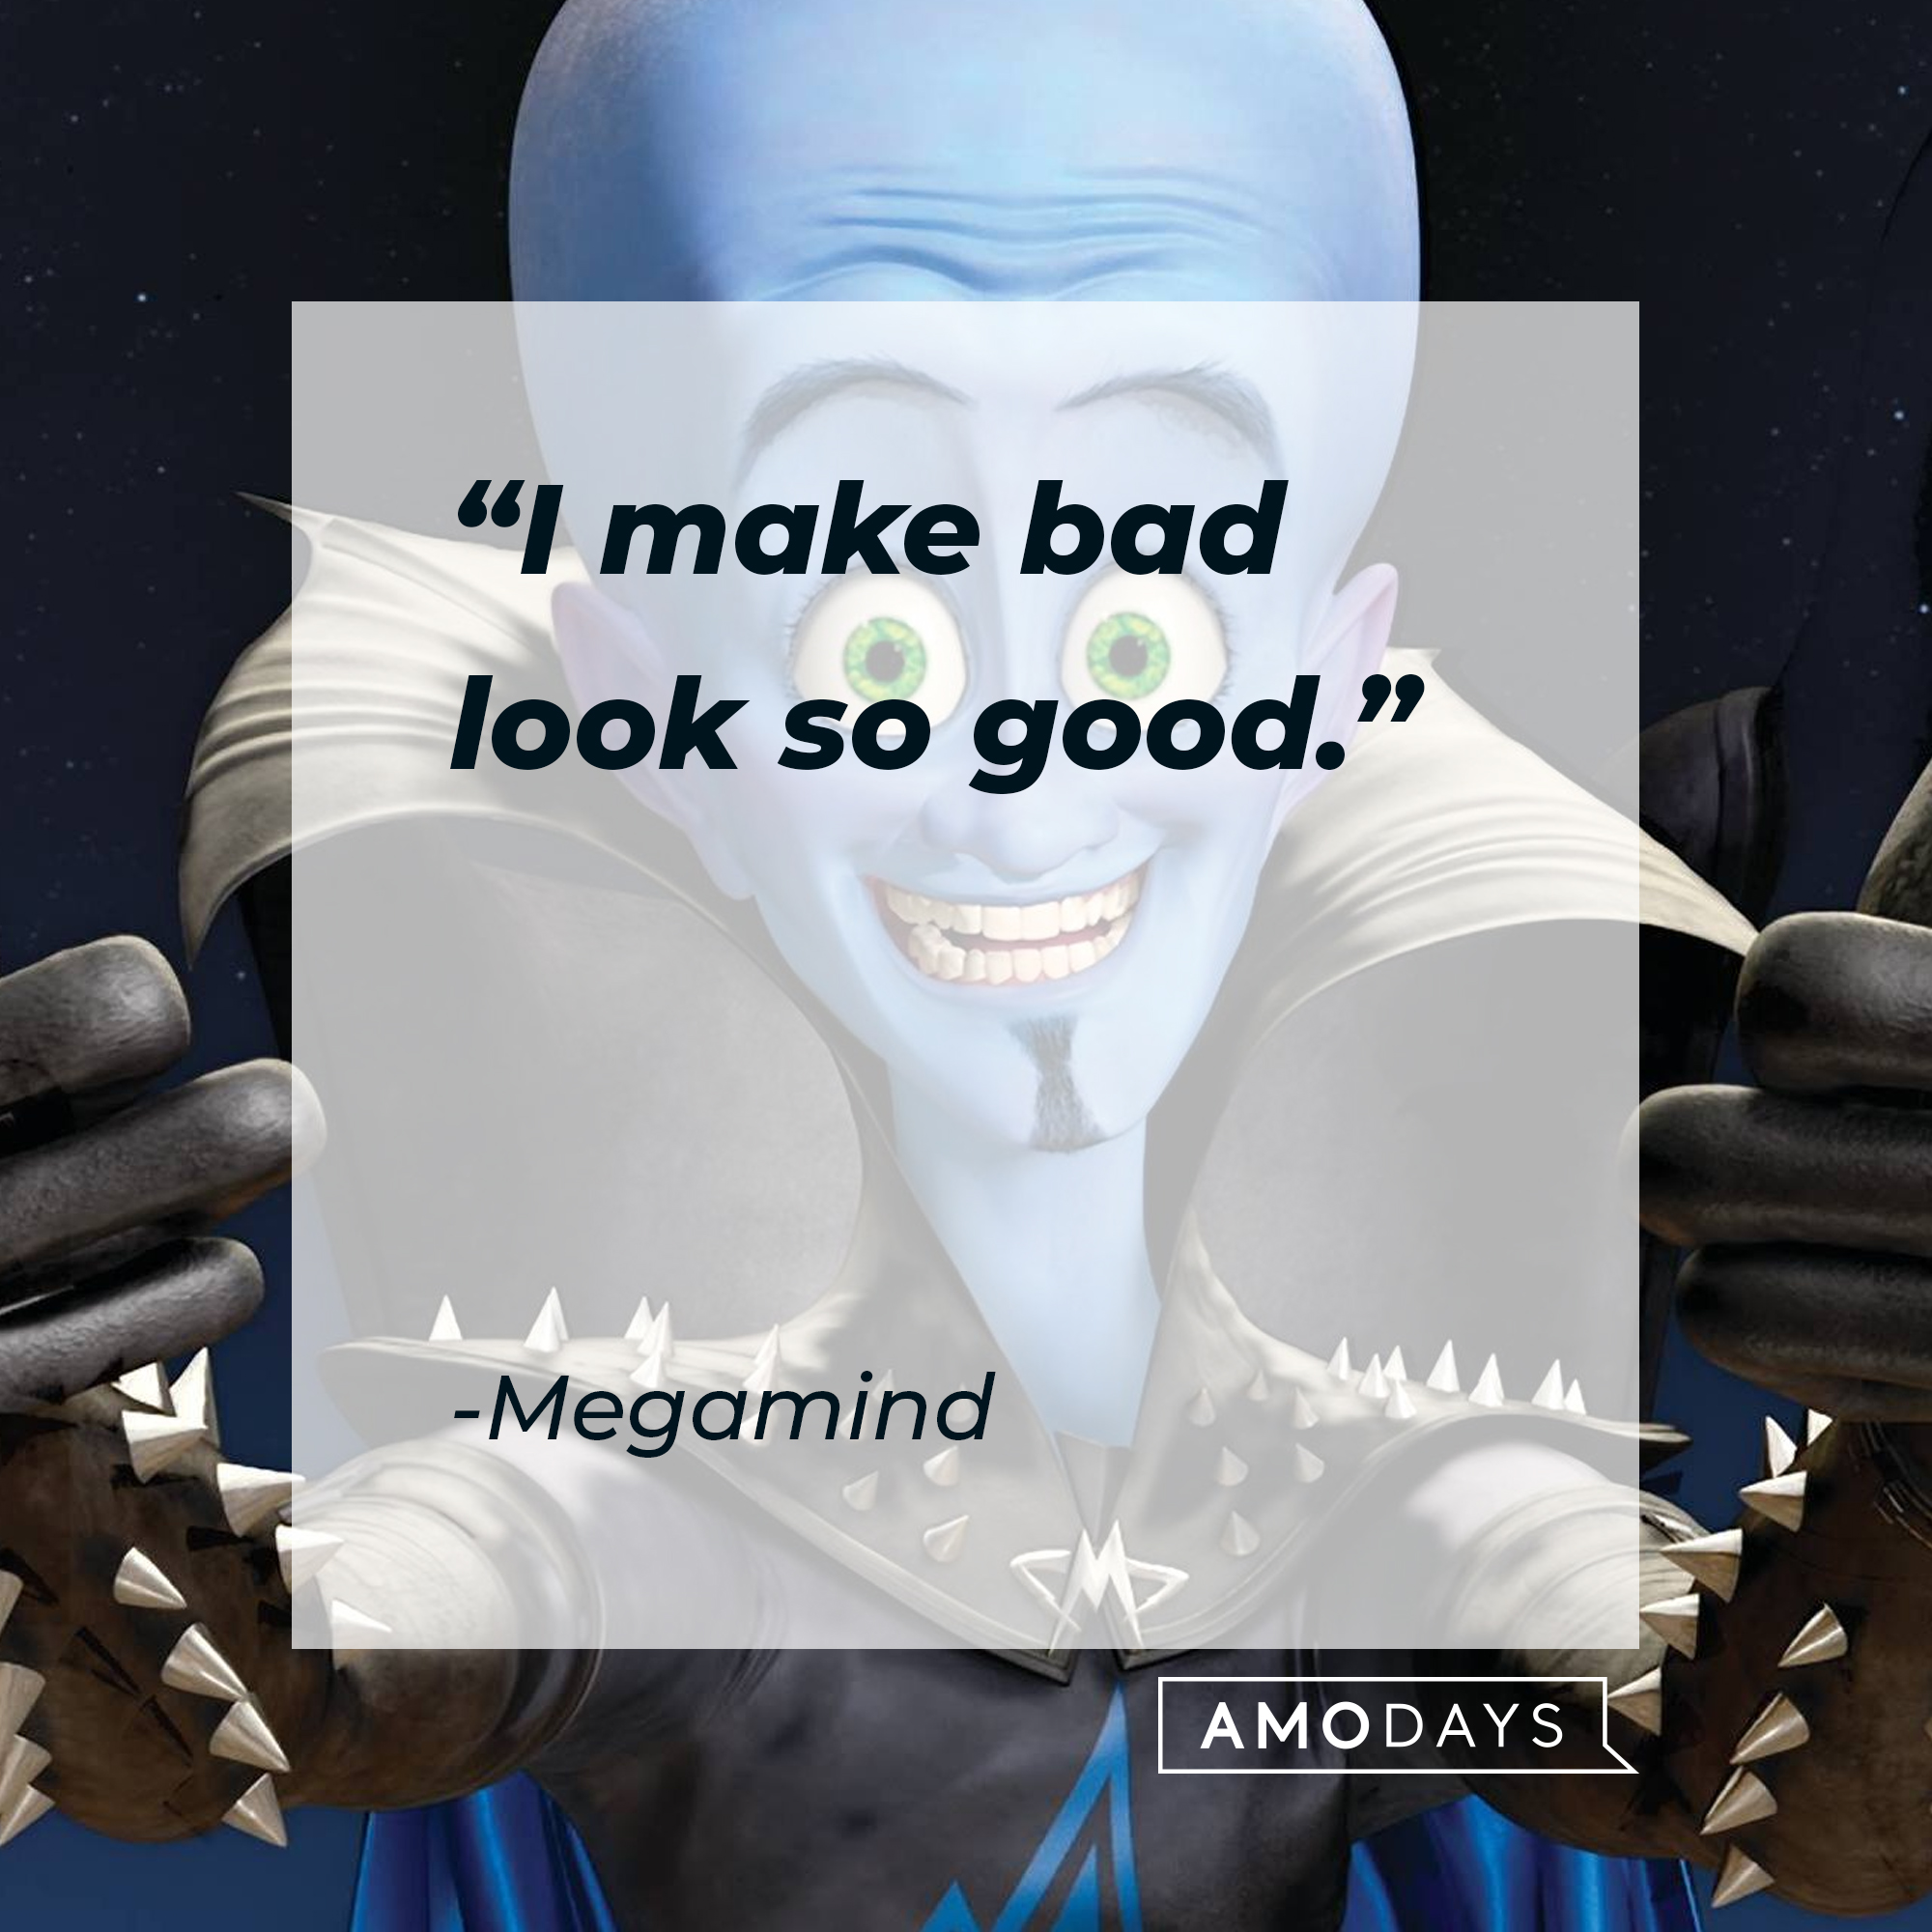 Megamind's quote: "I make bad look so good." | Source: Facebook.com/MegamindUK